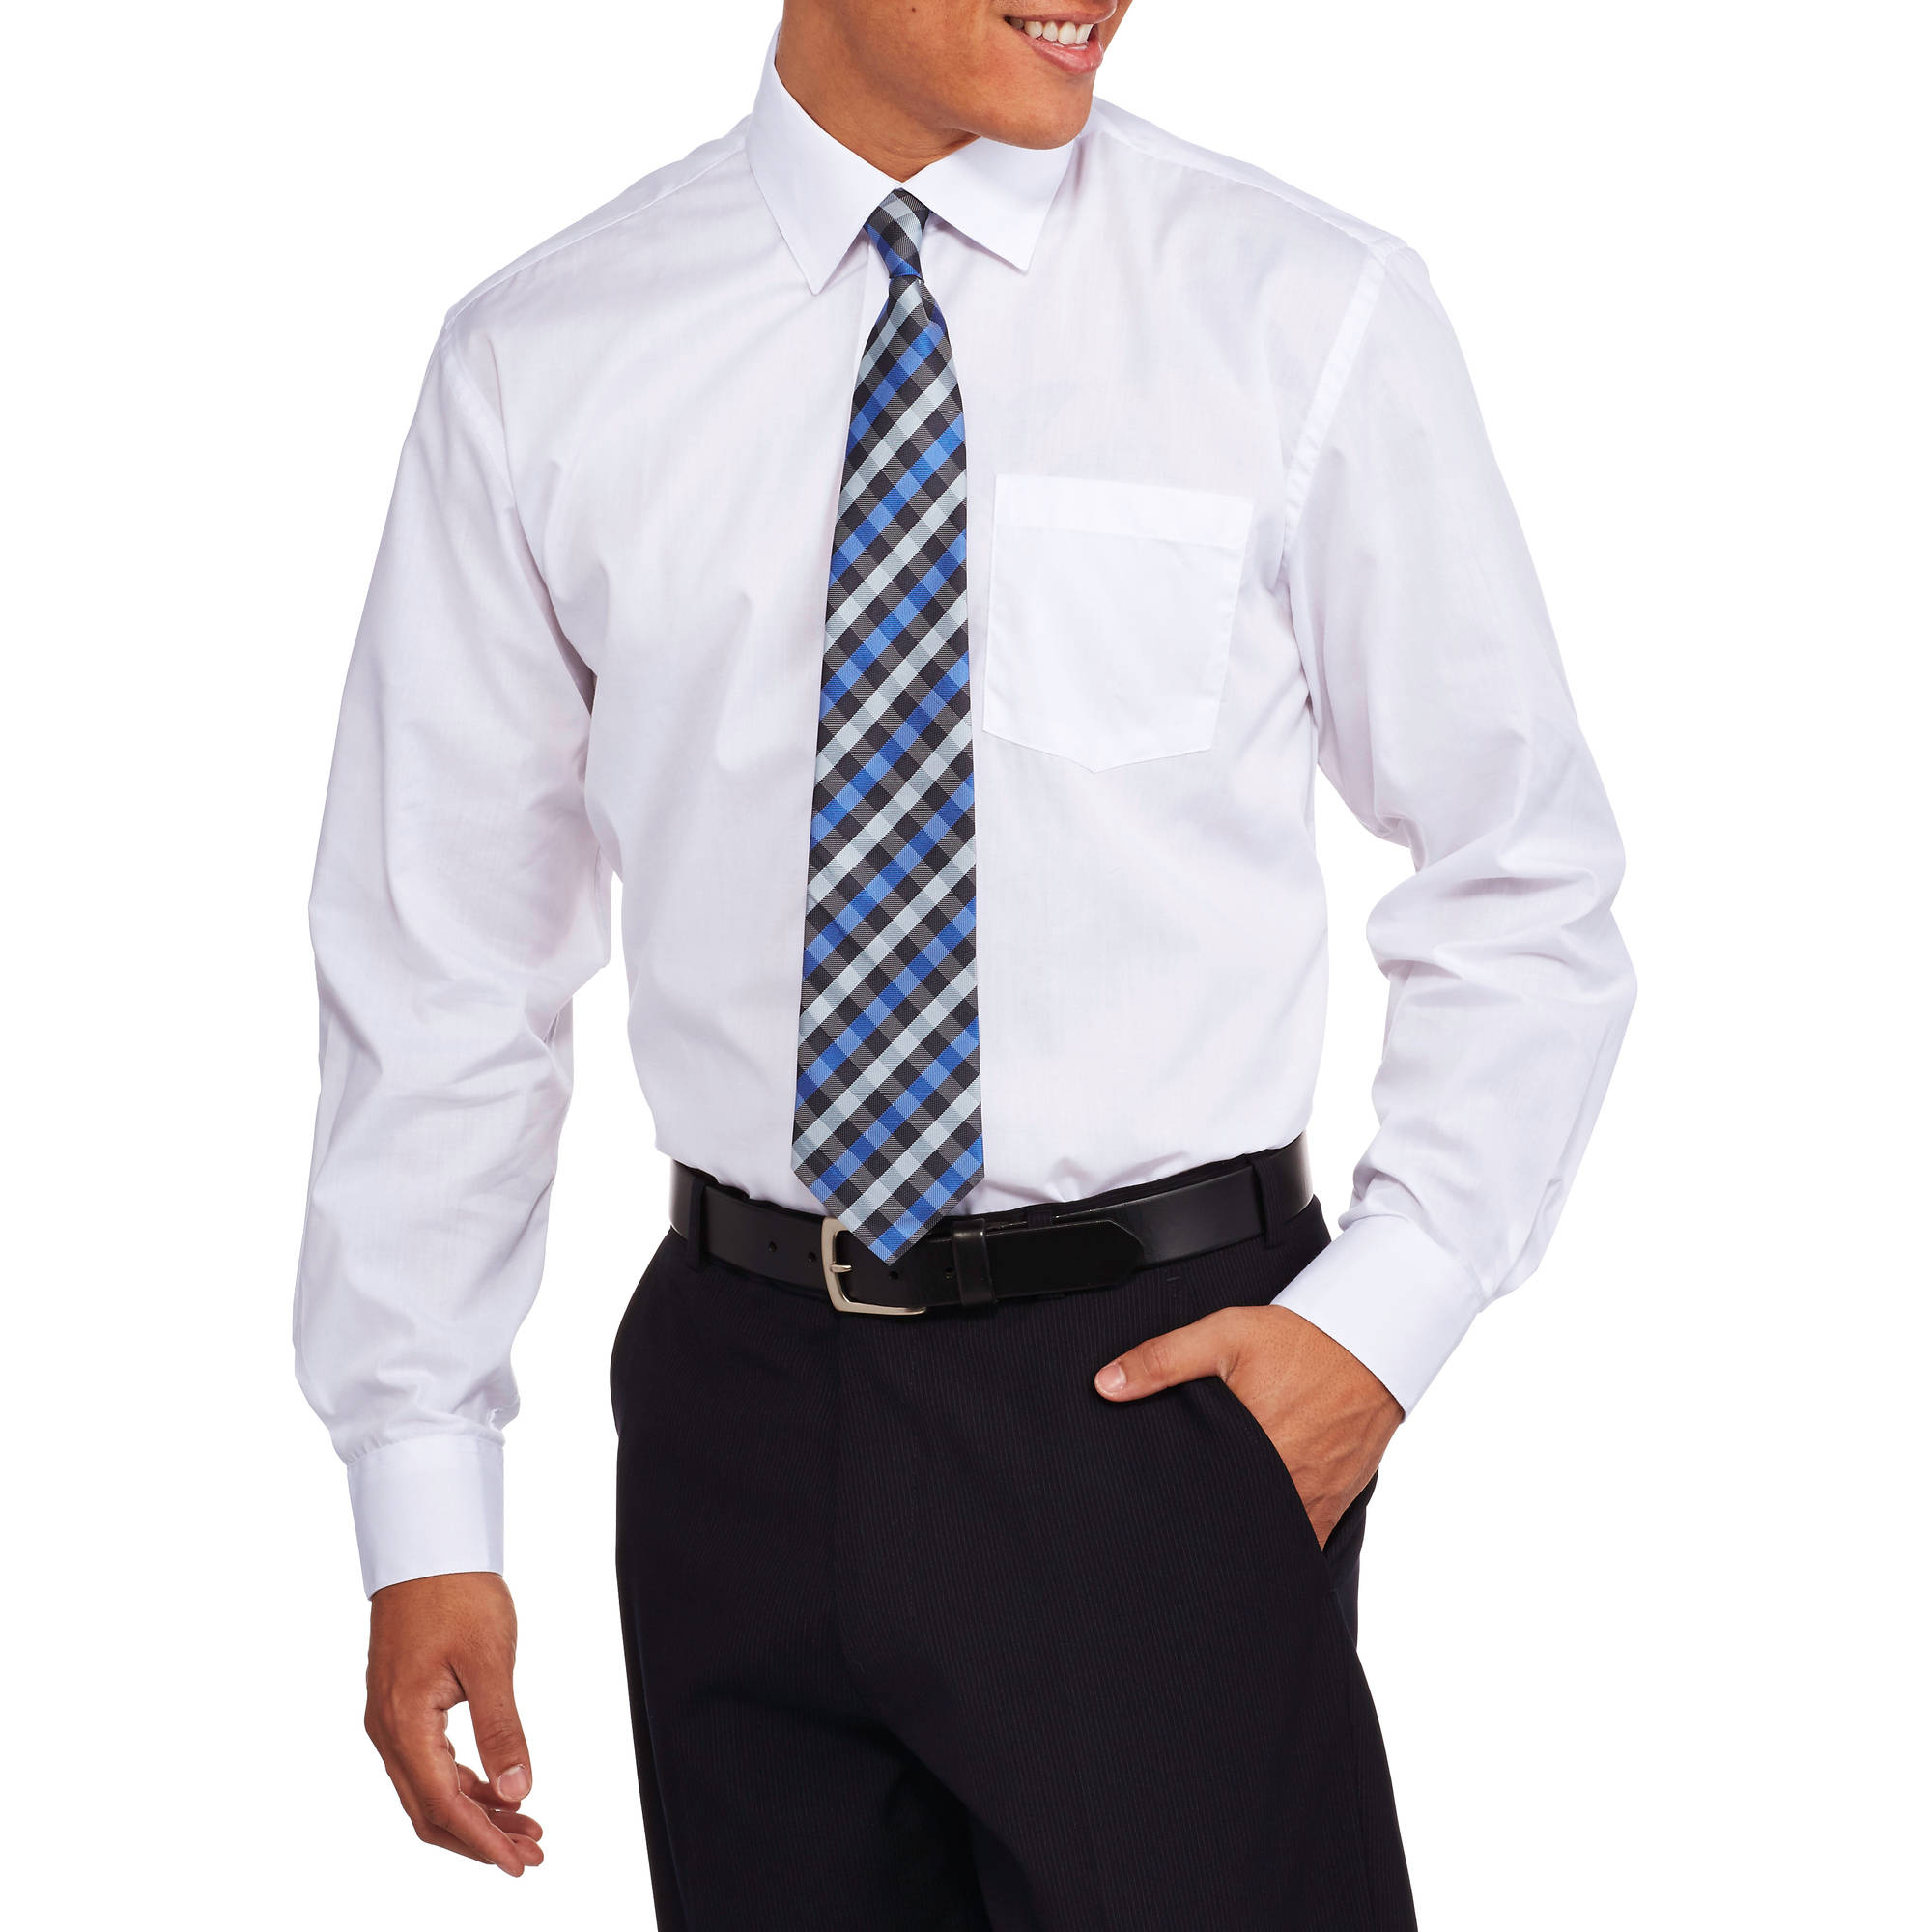 collared shirt tie